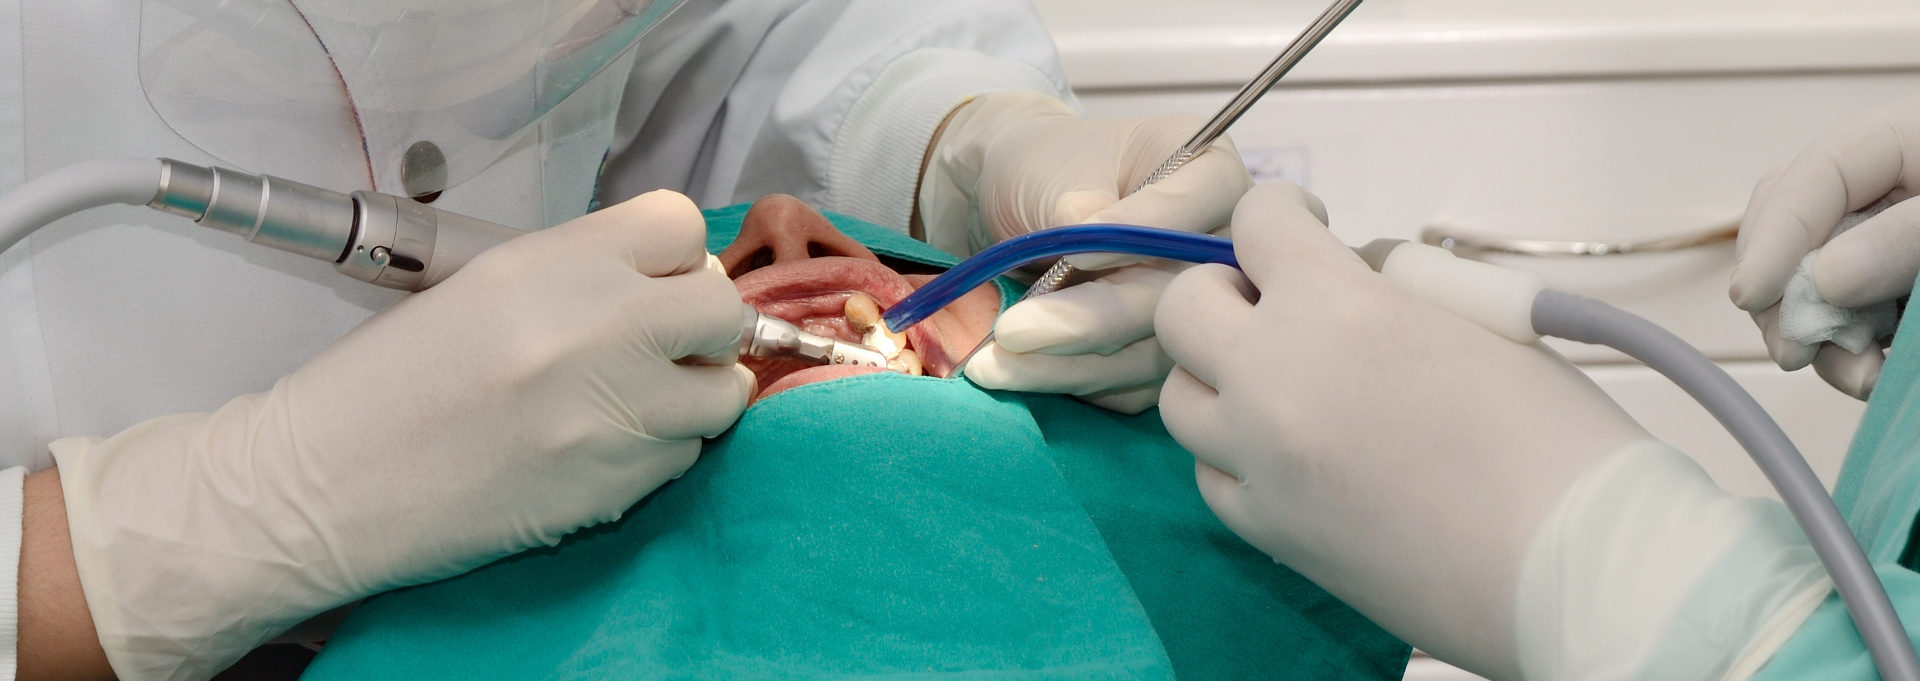 impianti dentali zigomatici